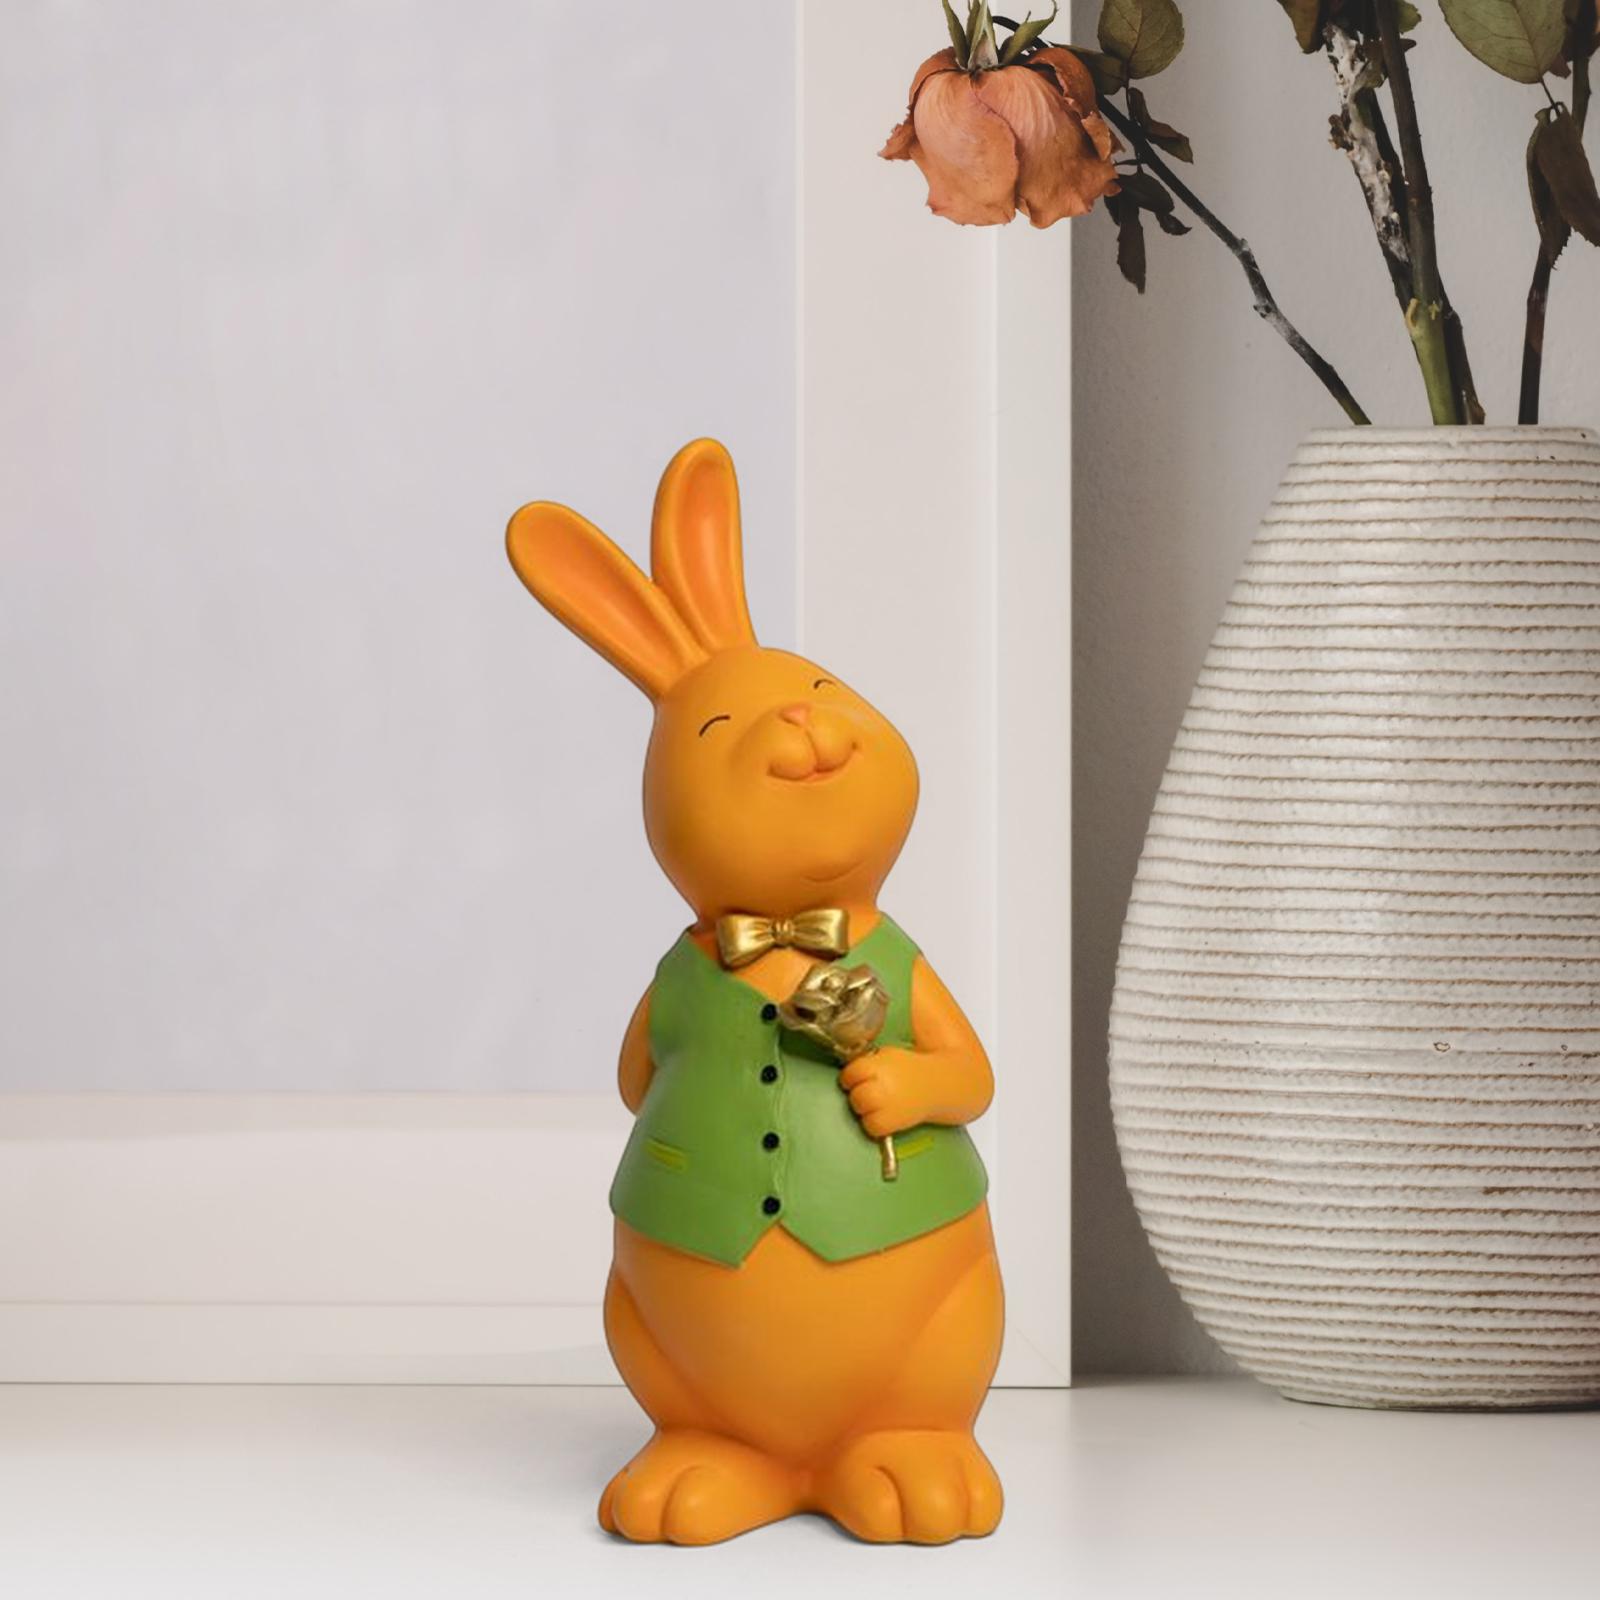 Rabbit Bunny Figurine Crafts Sculpture Gift Decorative Cabinet Lawn Style D